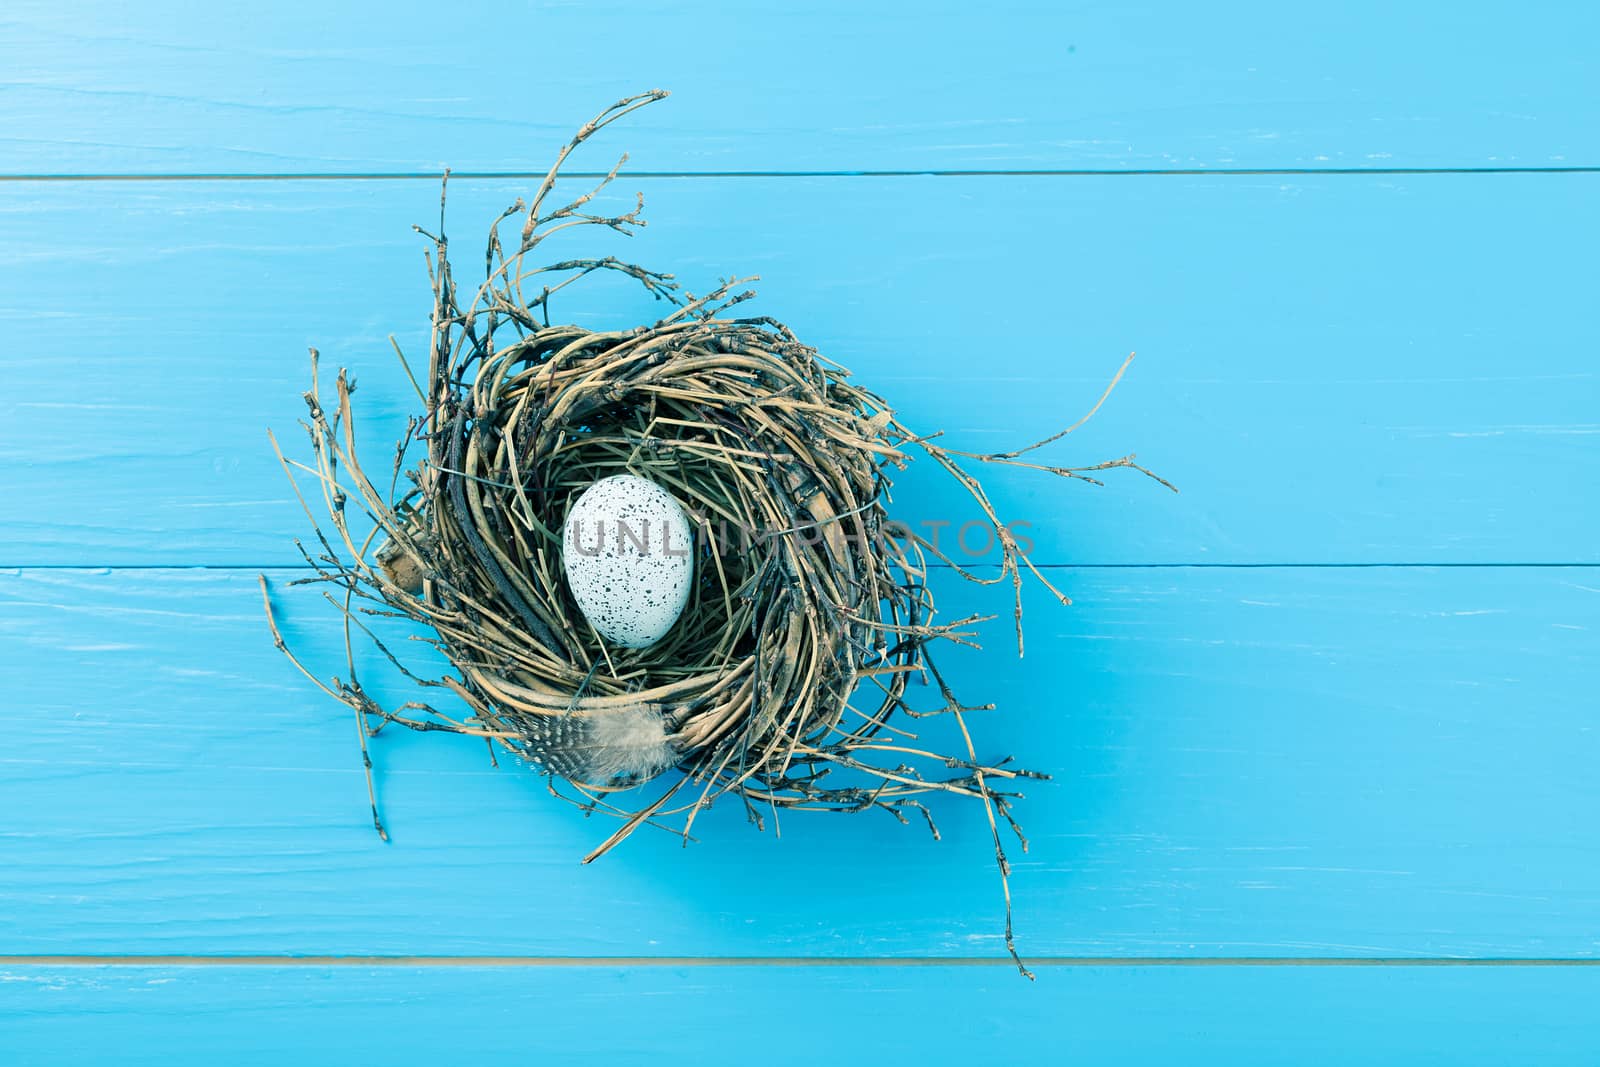 egg in nest on blue wooden background